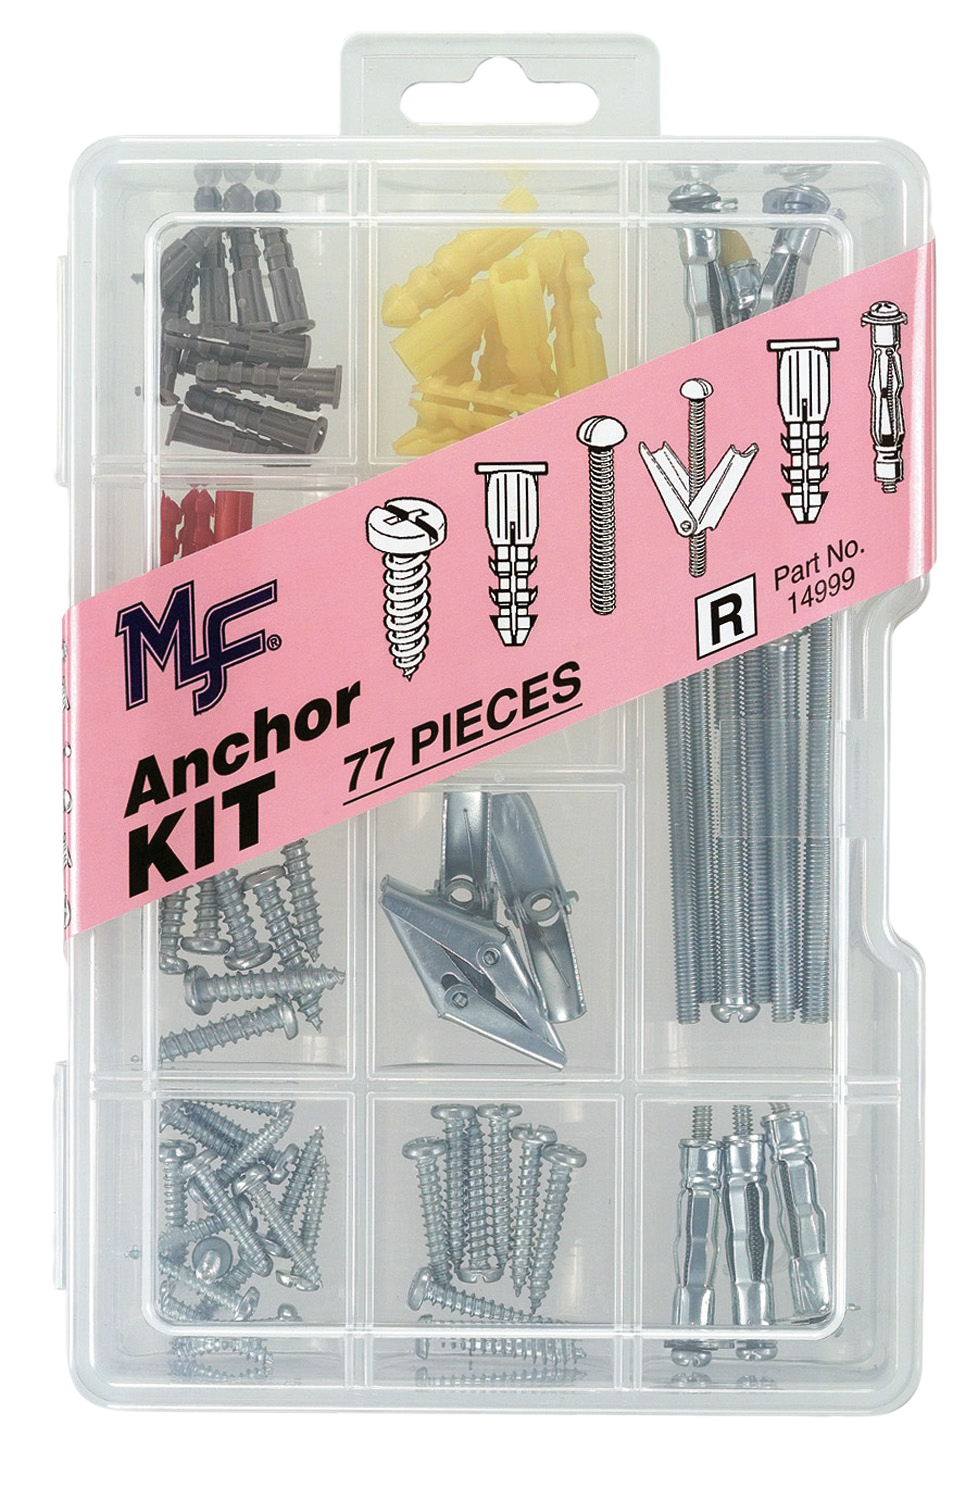 77 Piece Anchor Assortment Kit 14999